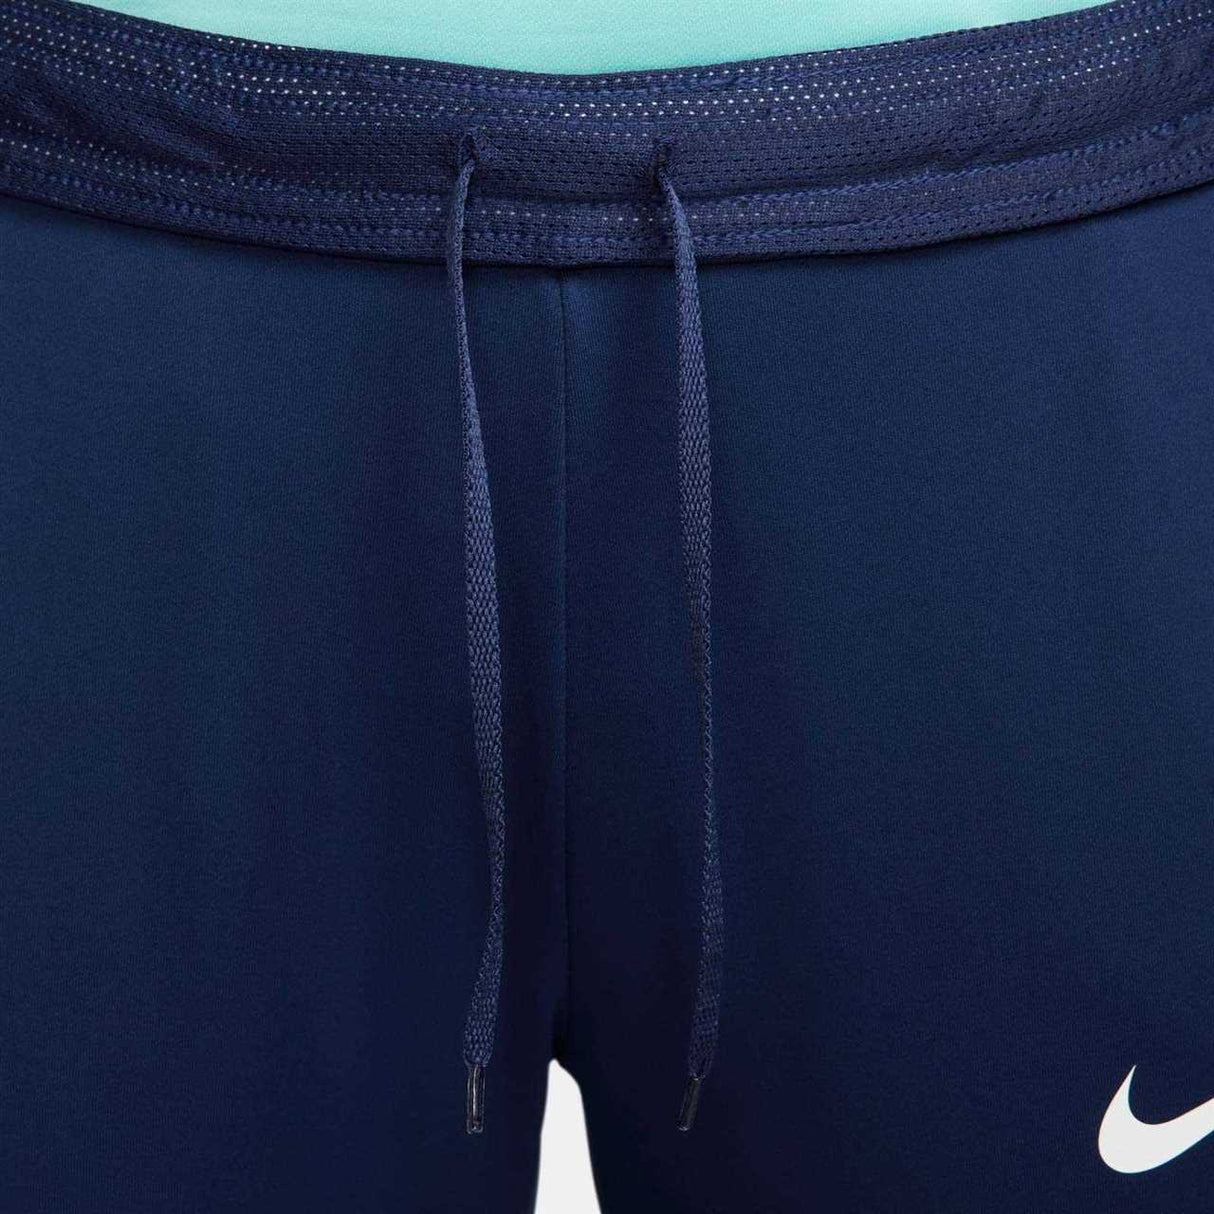 Nike Dri-FIT Strike Womens Soccer Pants